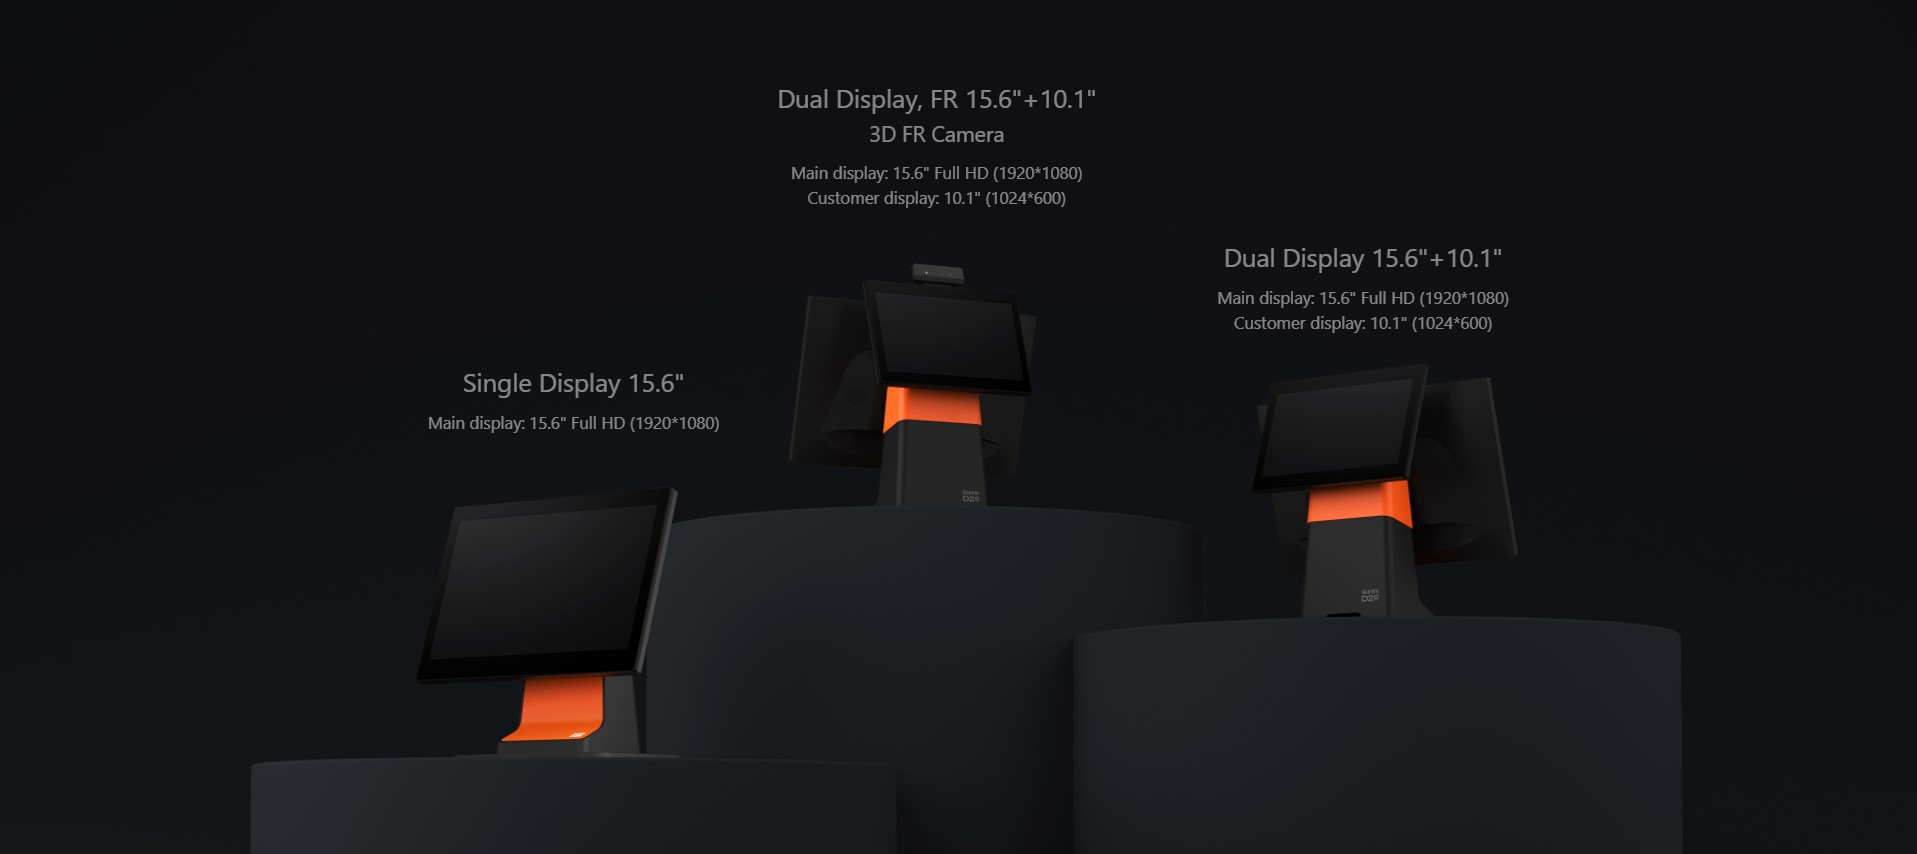 Single Display 15.6'' Main display: 15.6'' Full HD (1920*1080) | Dual Display, FR 15.6''+10.1'' 3D FR Camera Main display: 15.6'' Full HD (1920*1080) Customer display: 10.1'' (1024*600) | Dual Display 15.6''+10.1'' Main display: 15.6'' Full HD (1920*1080) Customer display: 10.1'' (1024*600)